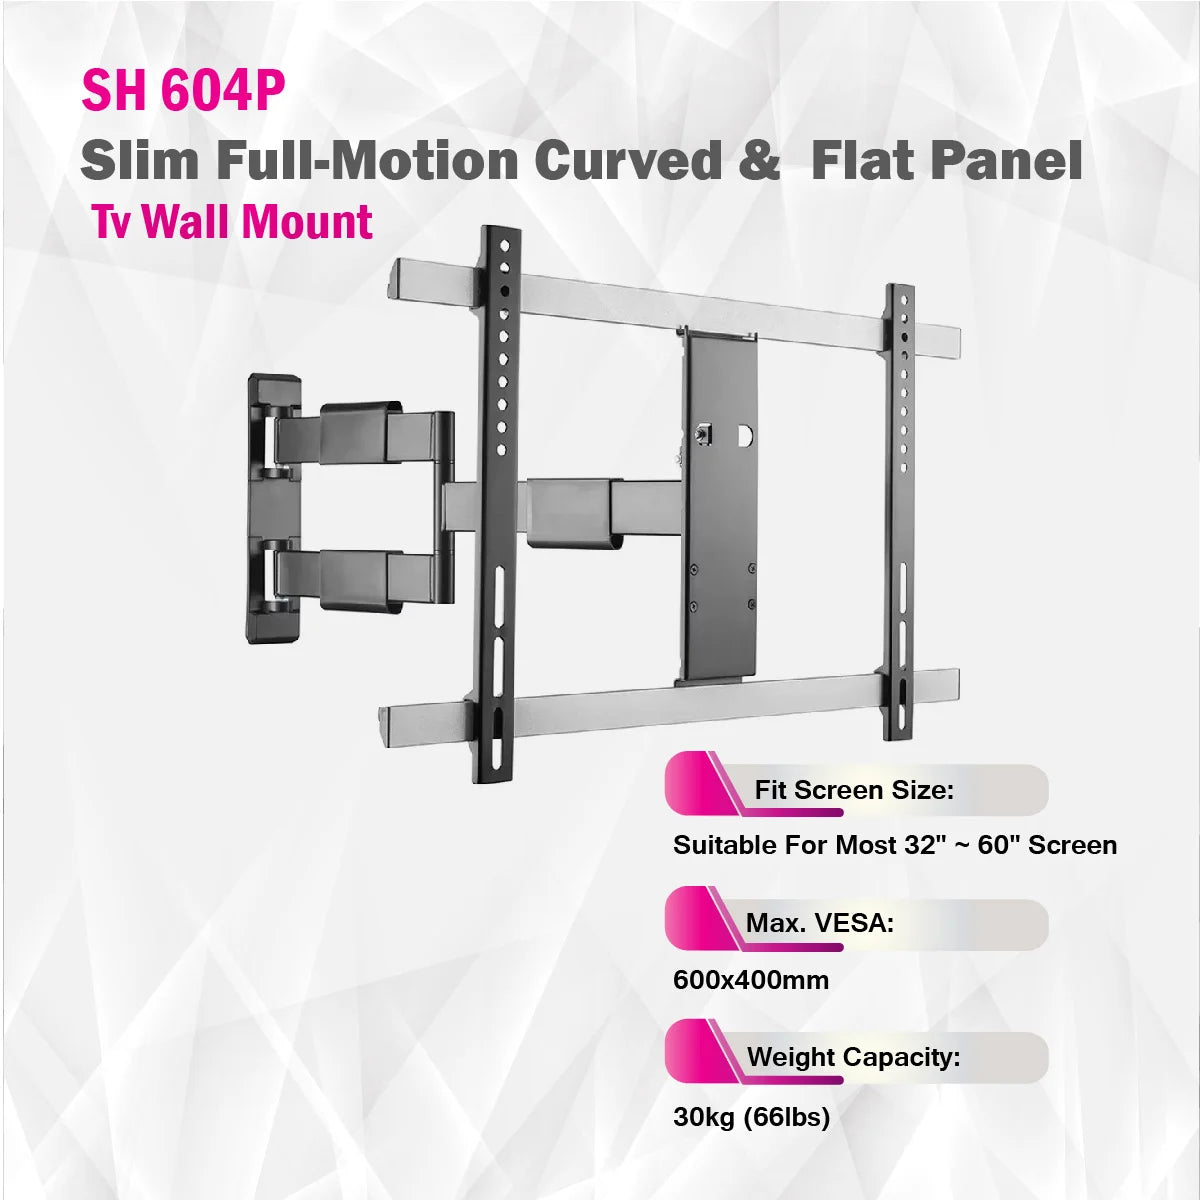 SkillTech - SH 604P - Slim Full-Motion Curved & Flat Panel Tv Wall Mount